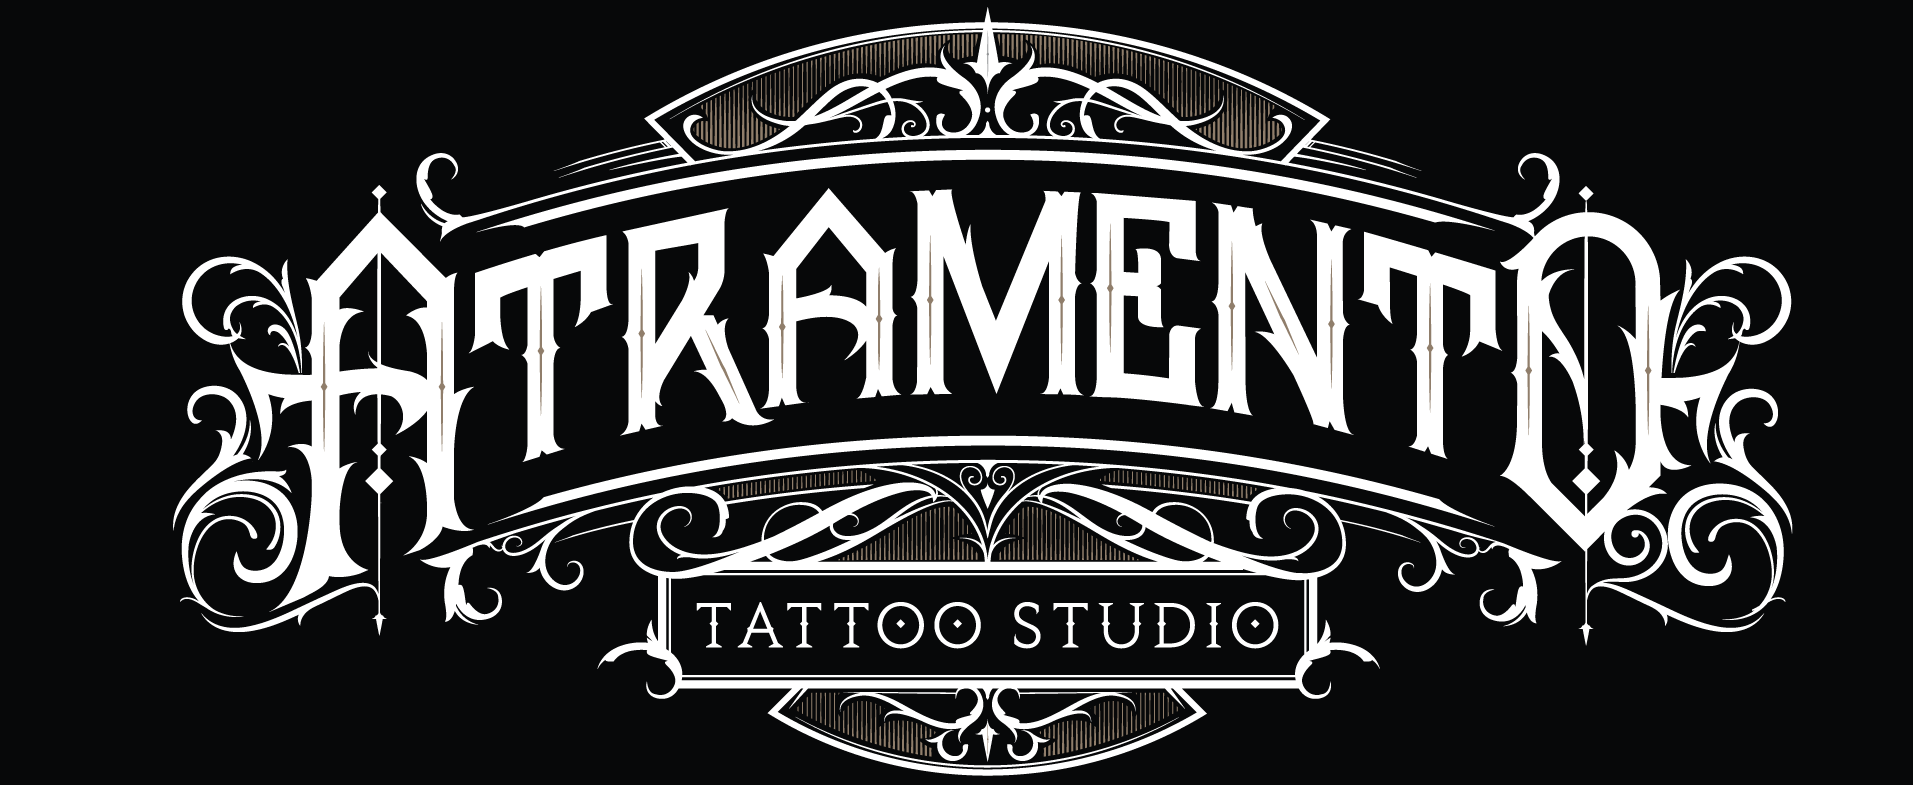 Atramento Tattoo Studio